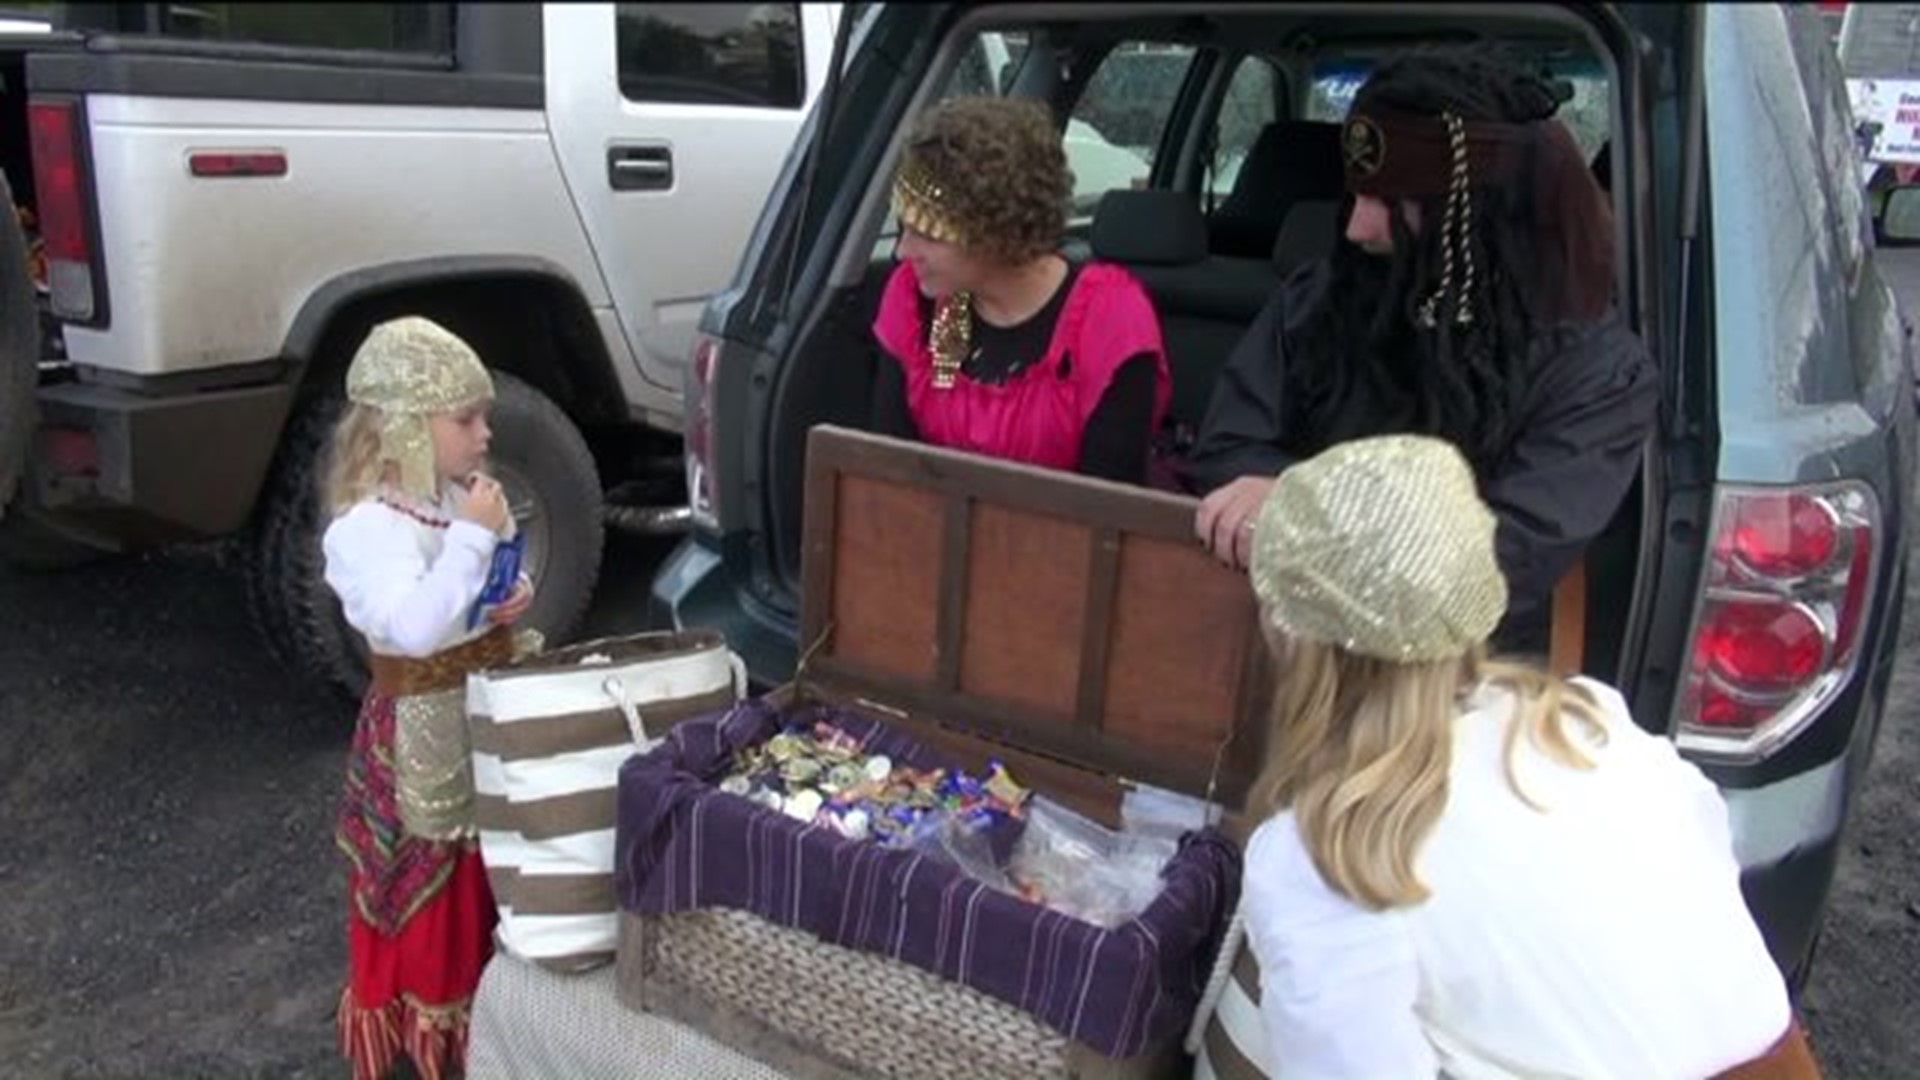 Sullivan County Kids Celebrate Halloween After Flooding